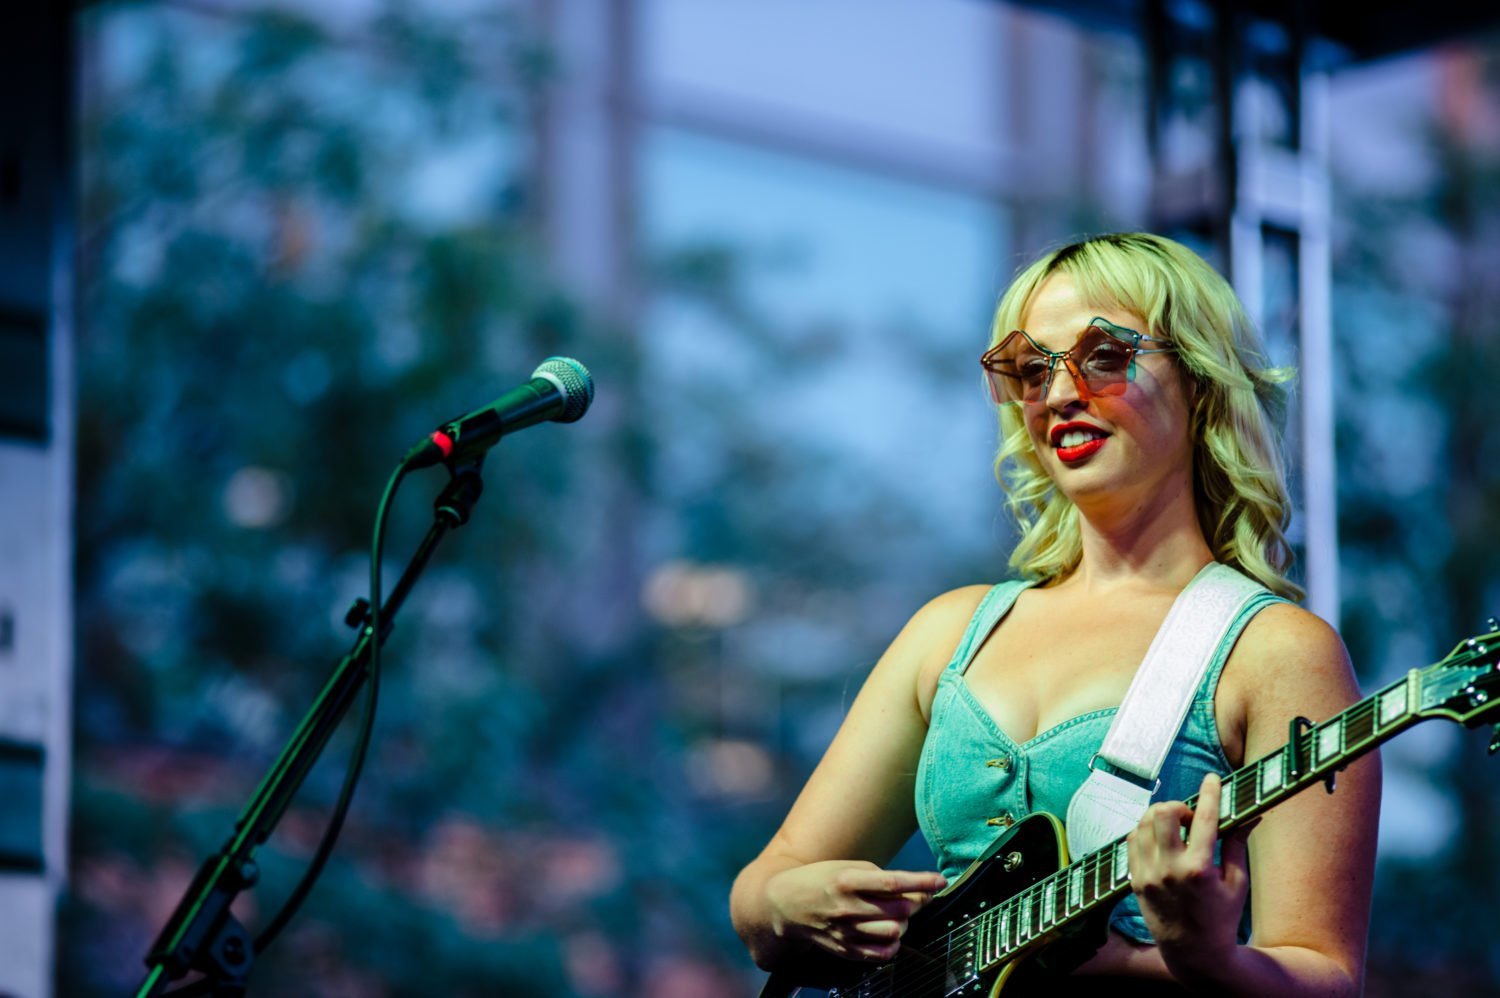 Elizabeth Moen performing at 80/35 Music Festival 2018 in Des Moines, Iowa